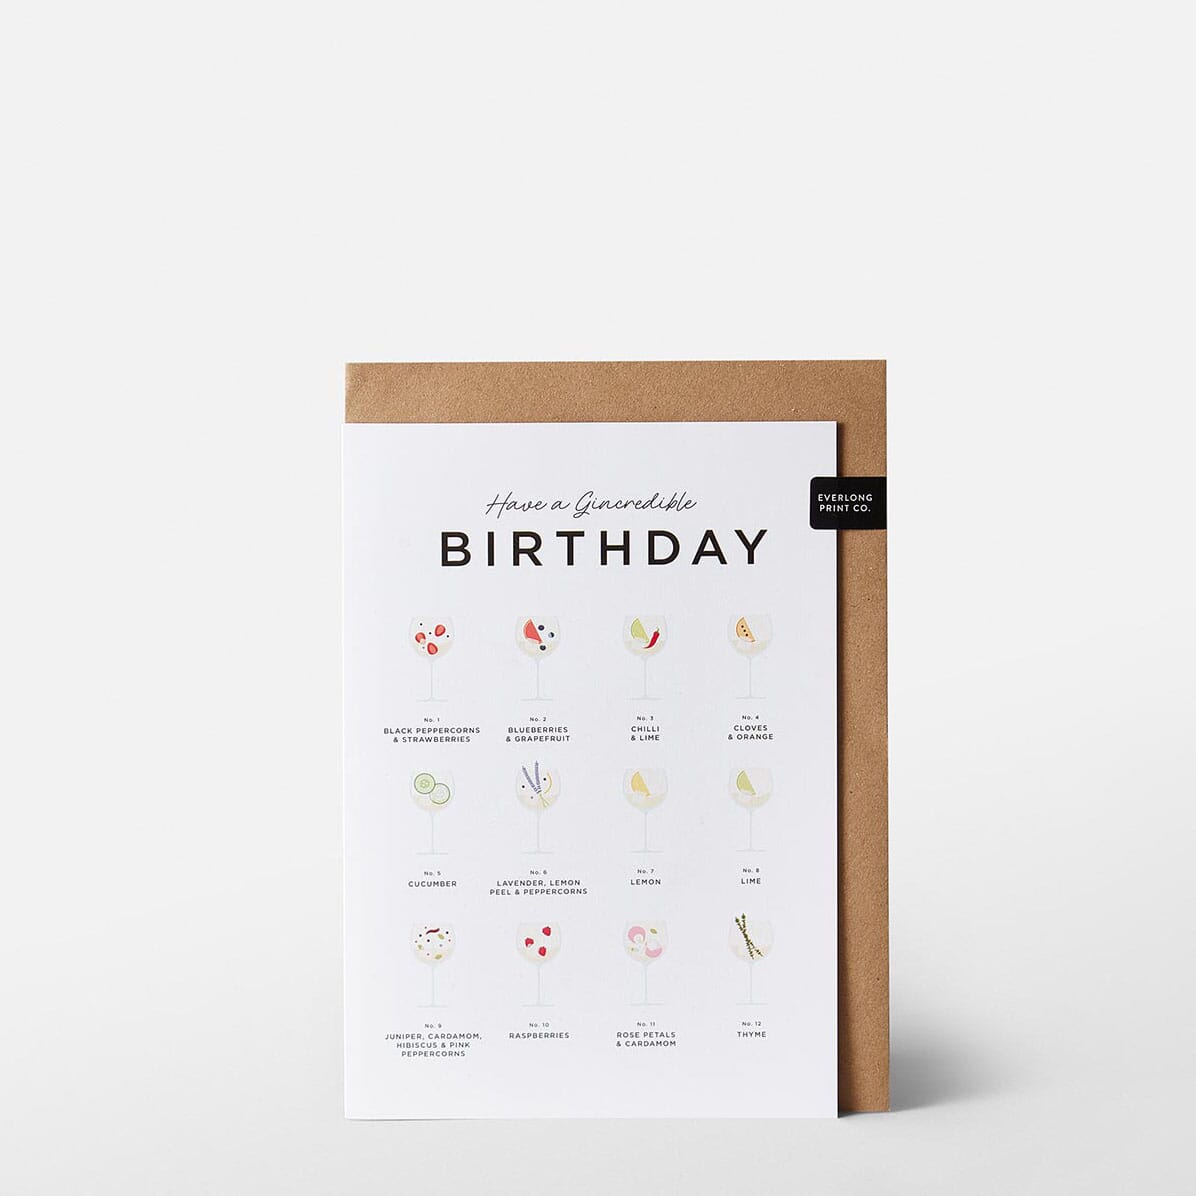 Have a Gincredible Birthday födelsedagskort